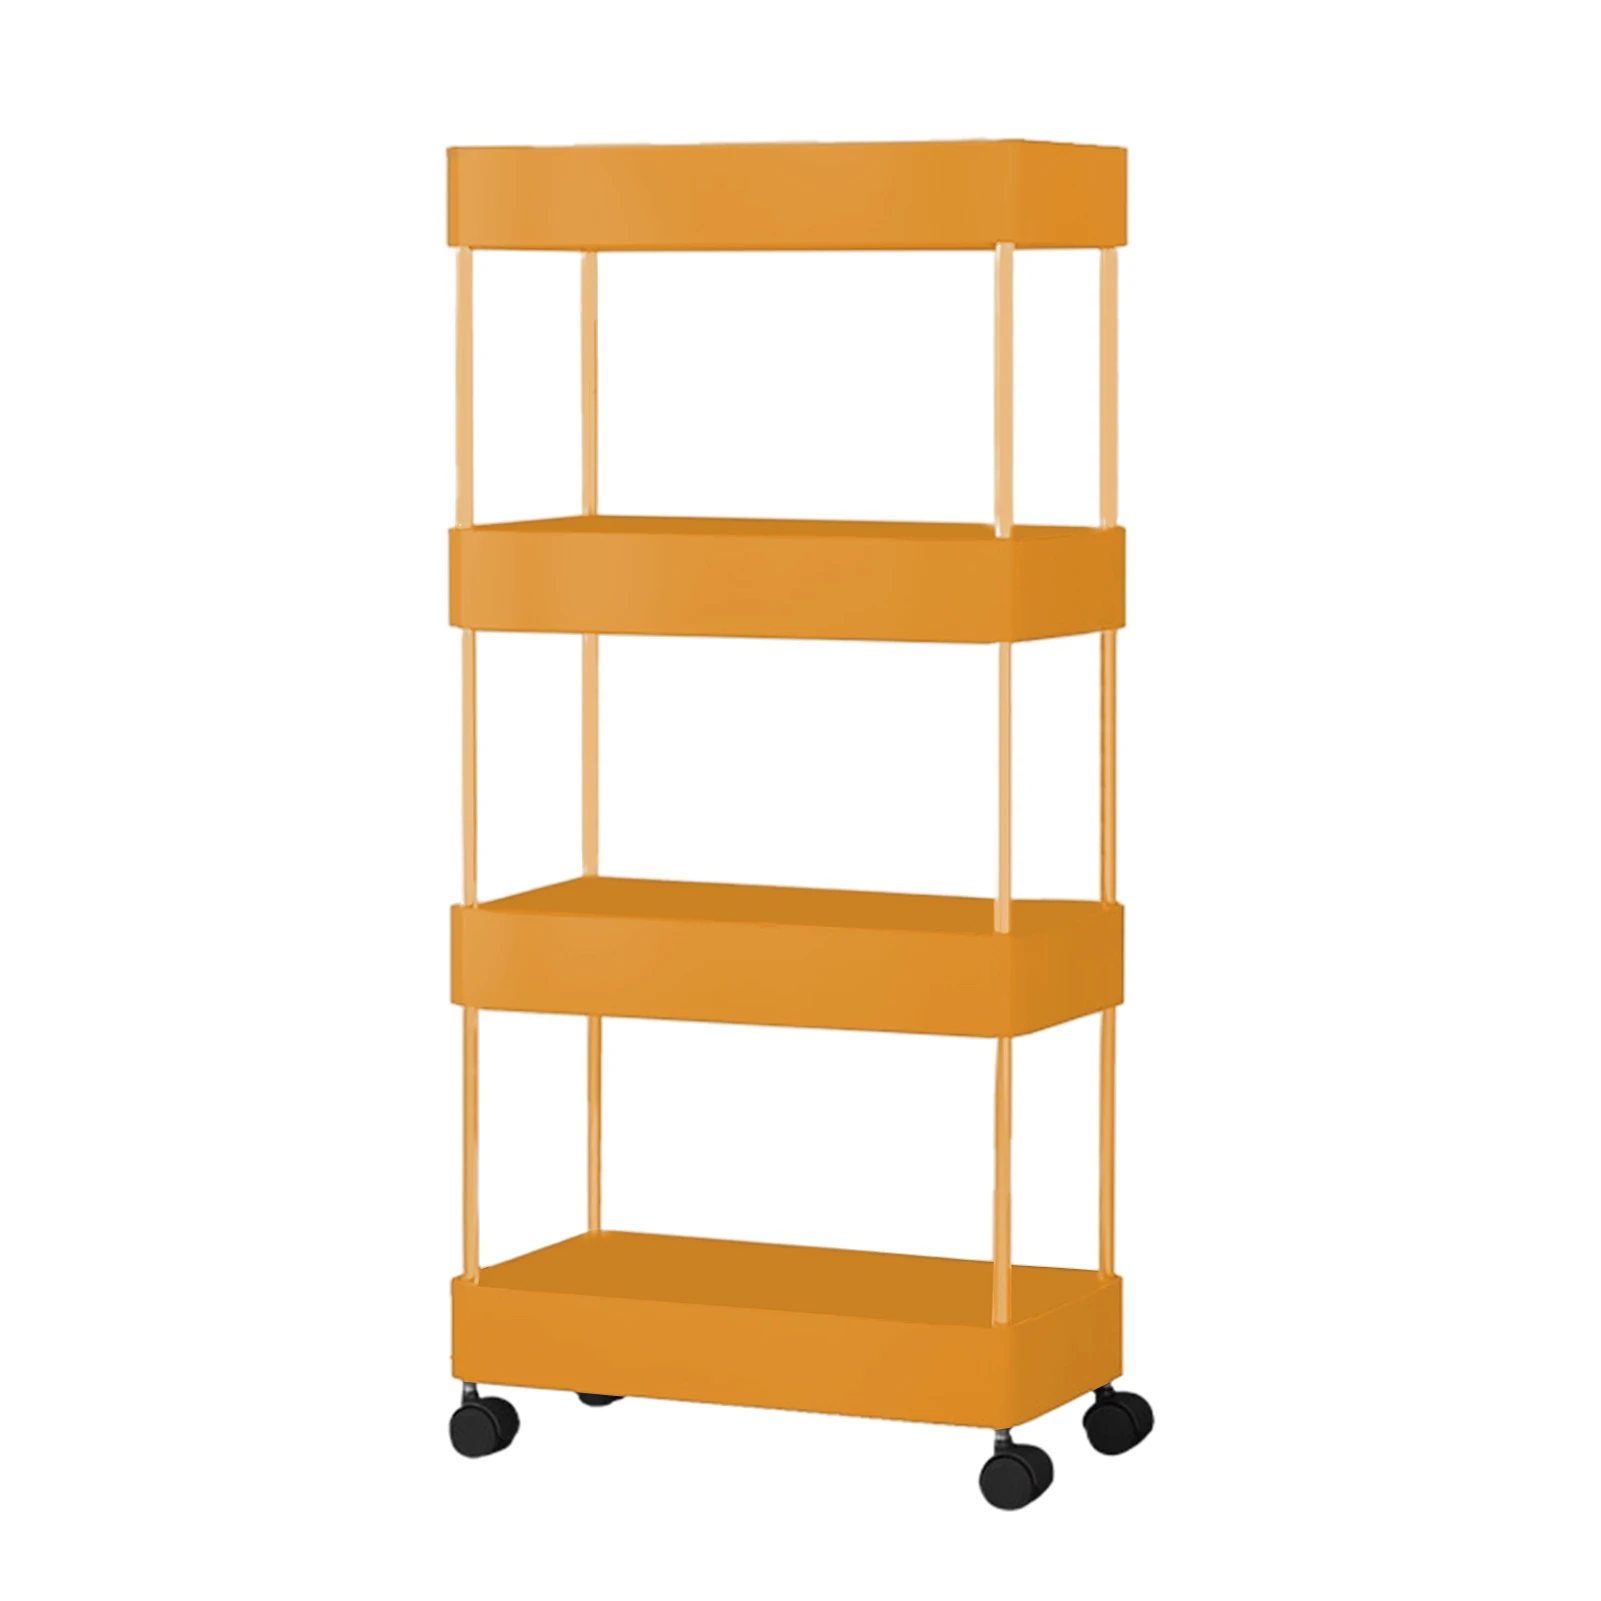 Carrito de almacenamiento estrecho para cocina, carrito utilitario delgado  de 3 niveles, estante organizador deslizante con ruedas, fácil de instalar